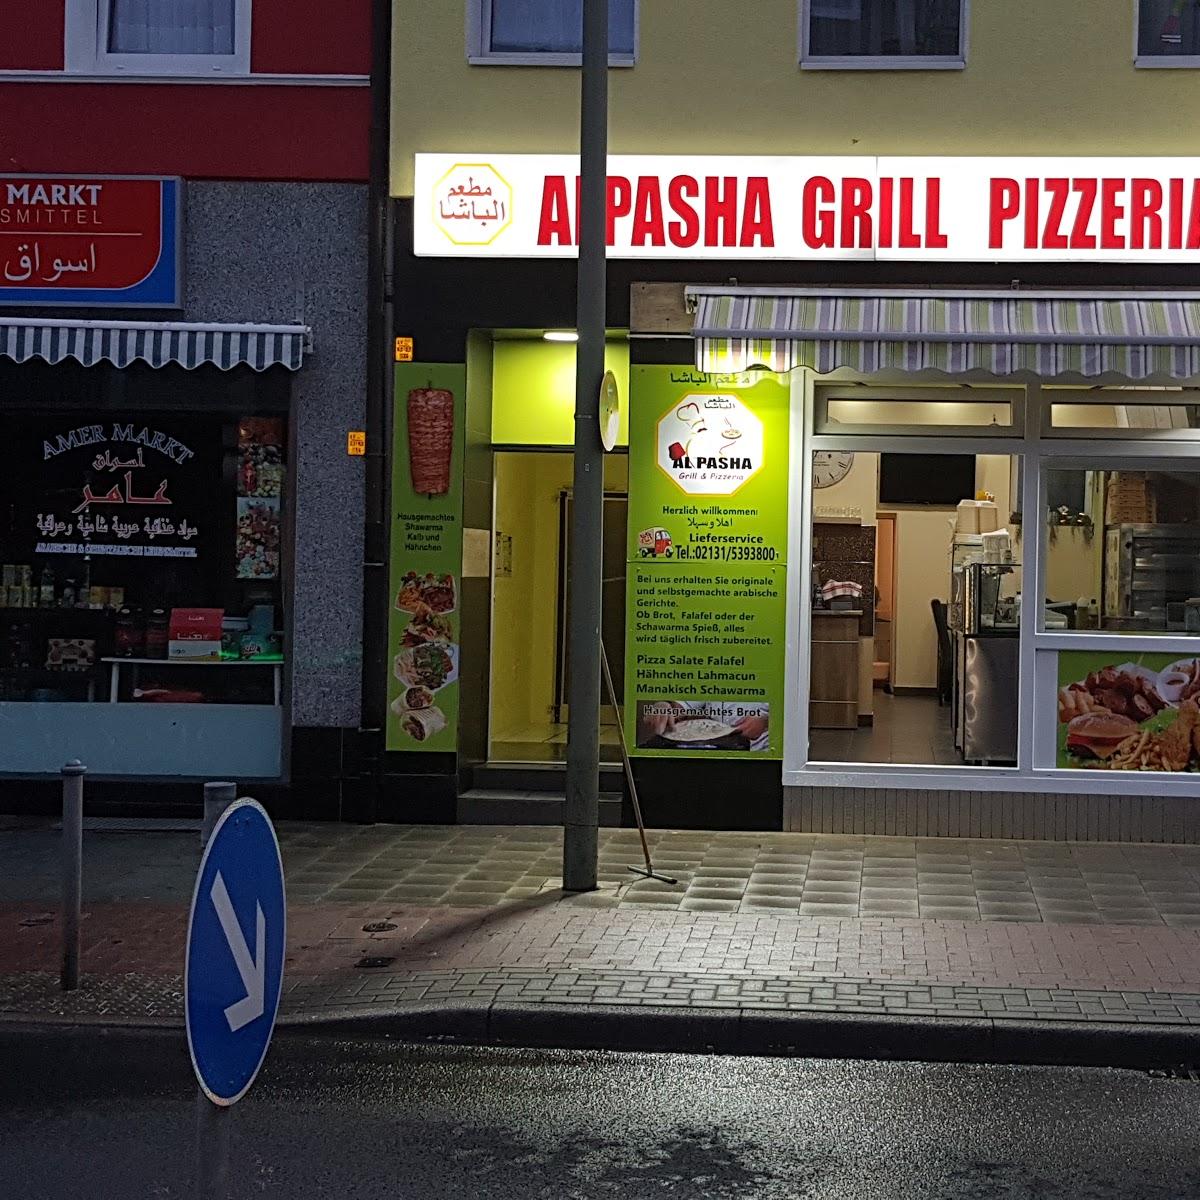 Restaurant "Al pasha grill&pizzeria" in Neuss